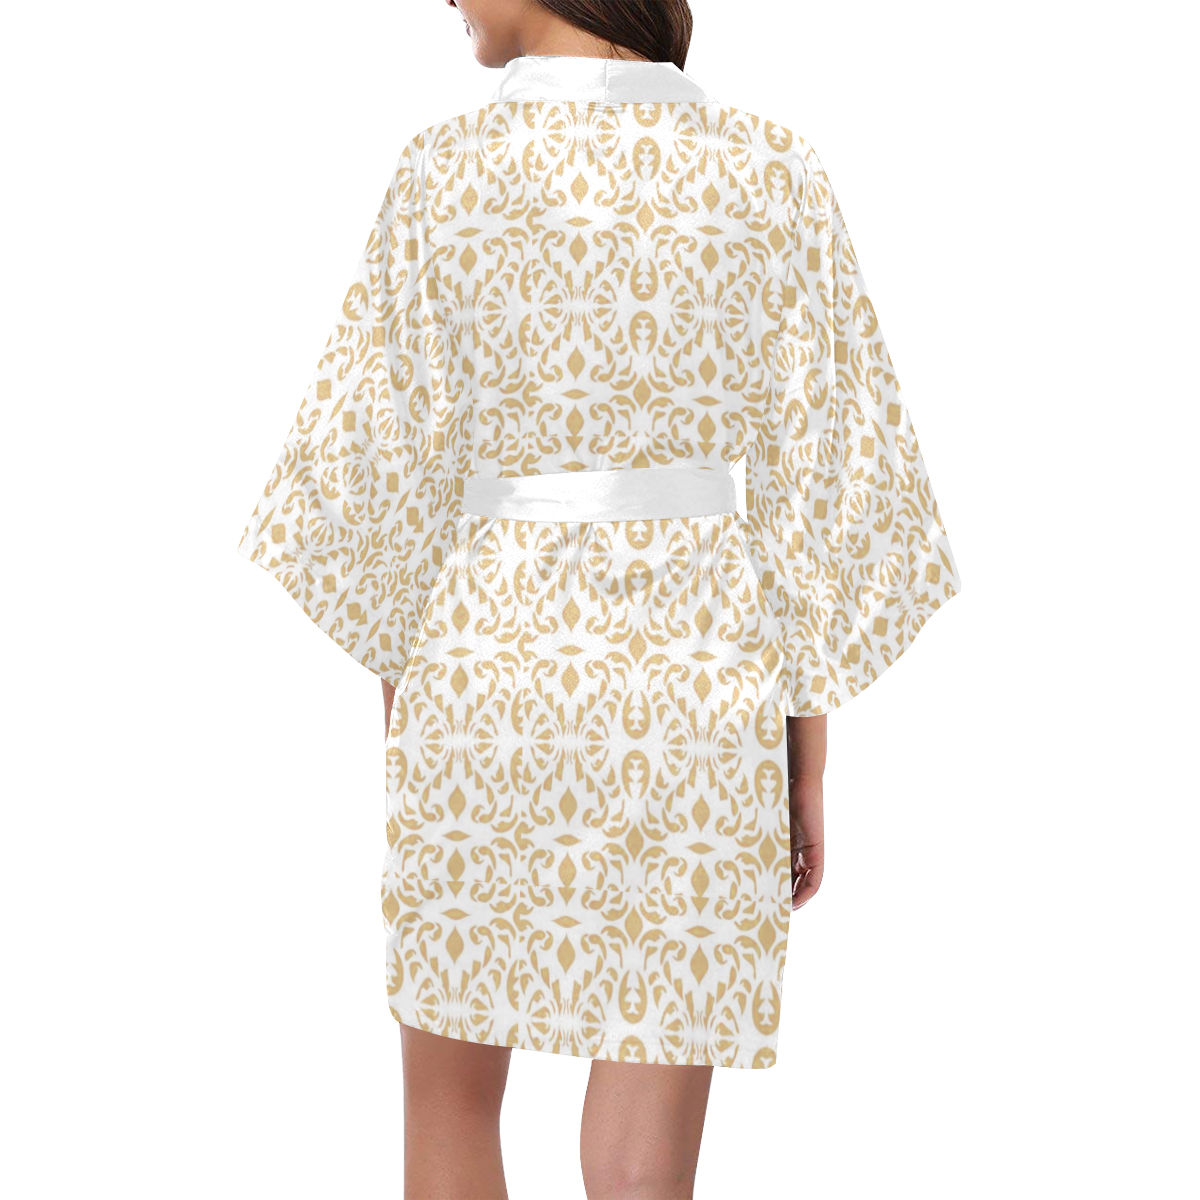 Gold Tribal Stylish Kimono Robe